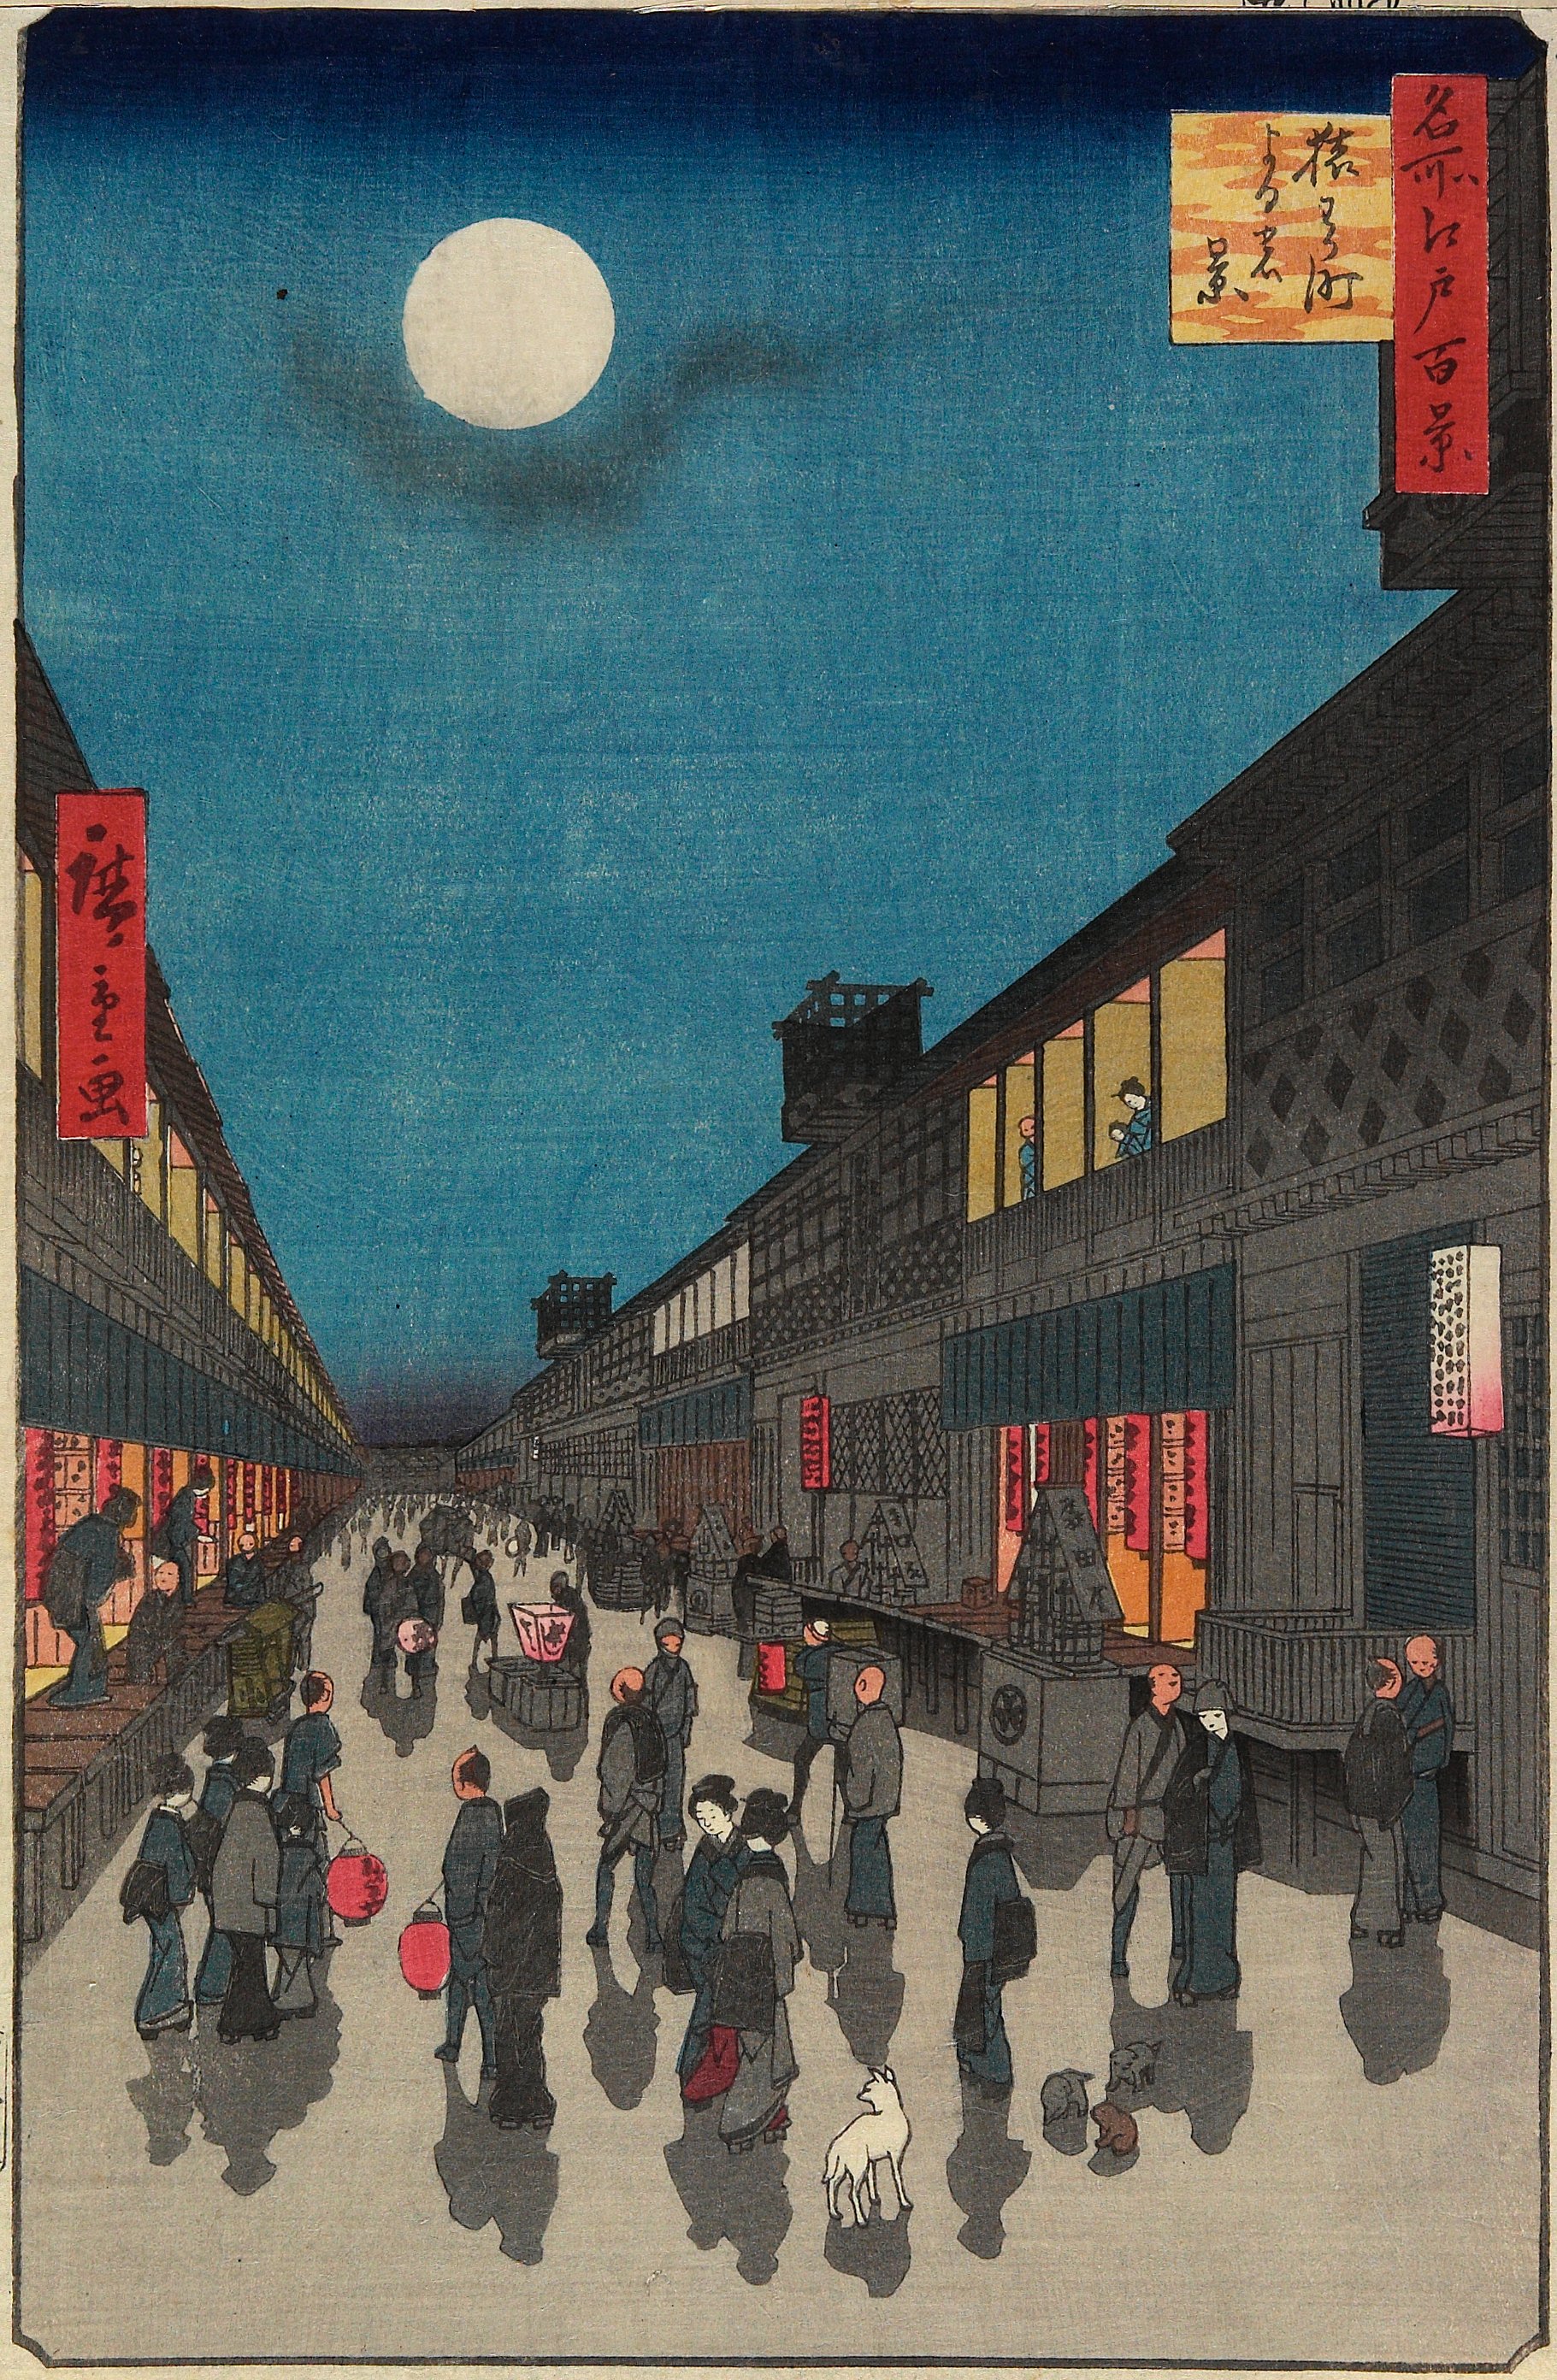 Night View of Saruwaka-machi by  Hiroshige - 1857 - 34 x 22.1 cm Brooklyn Museum